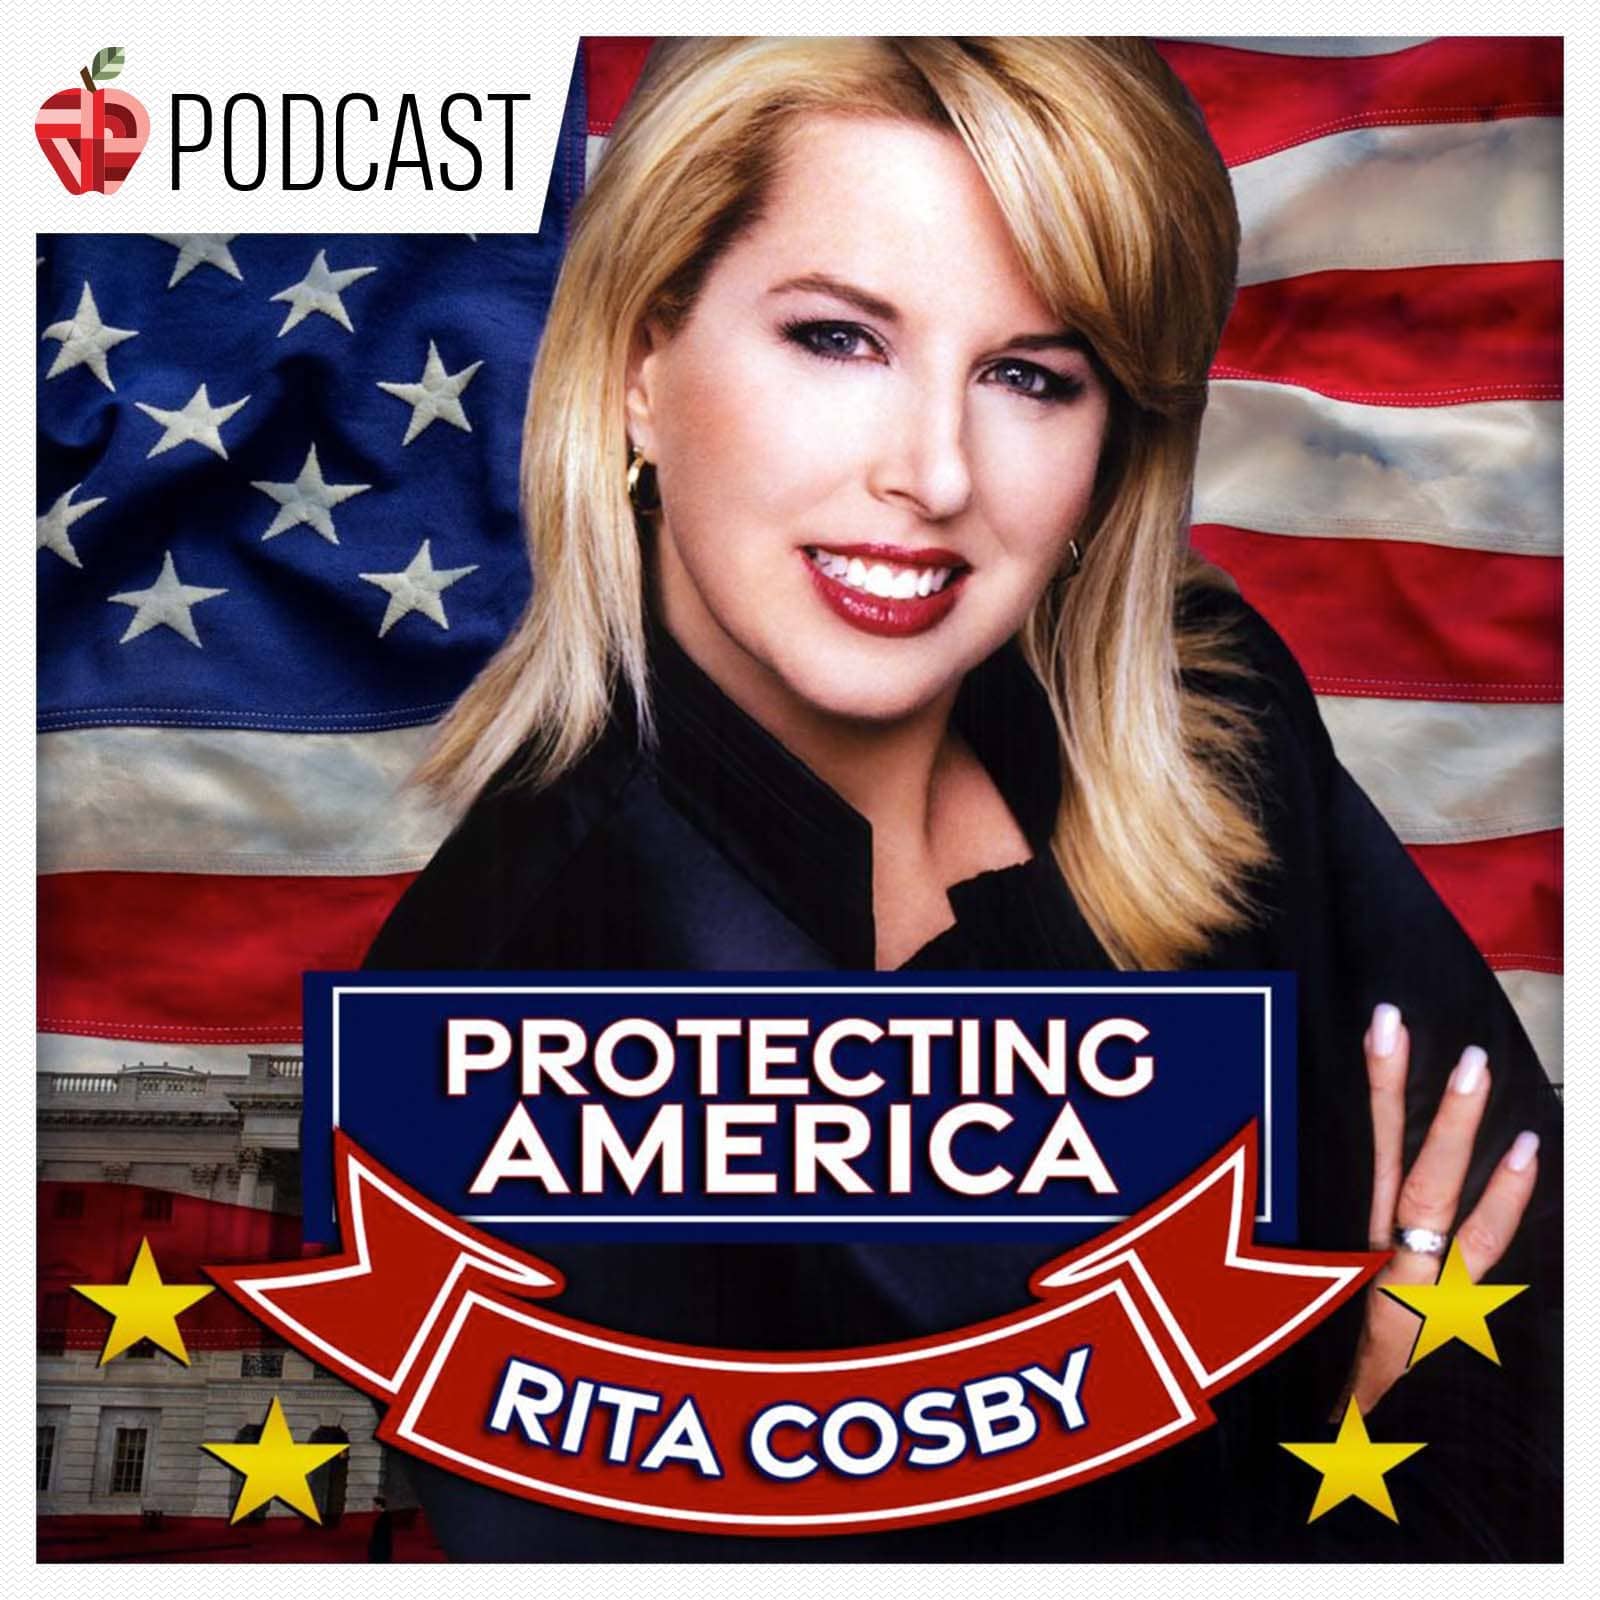 Protecting America Rita Cosby